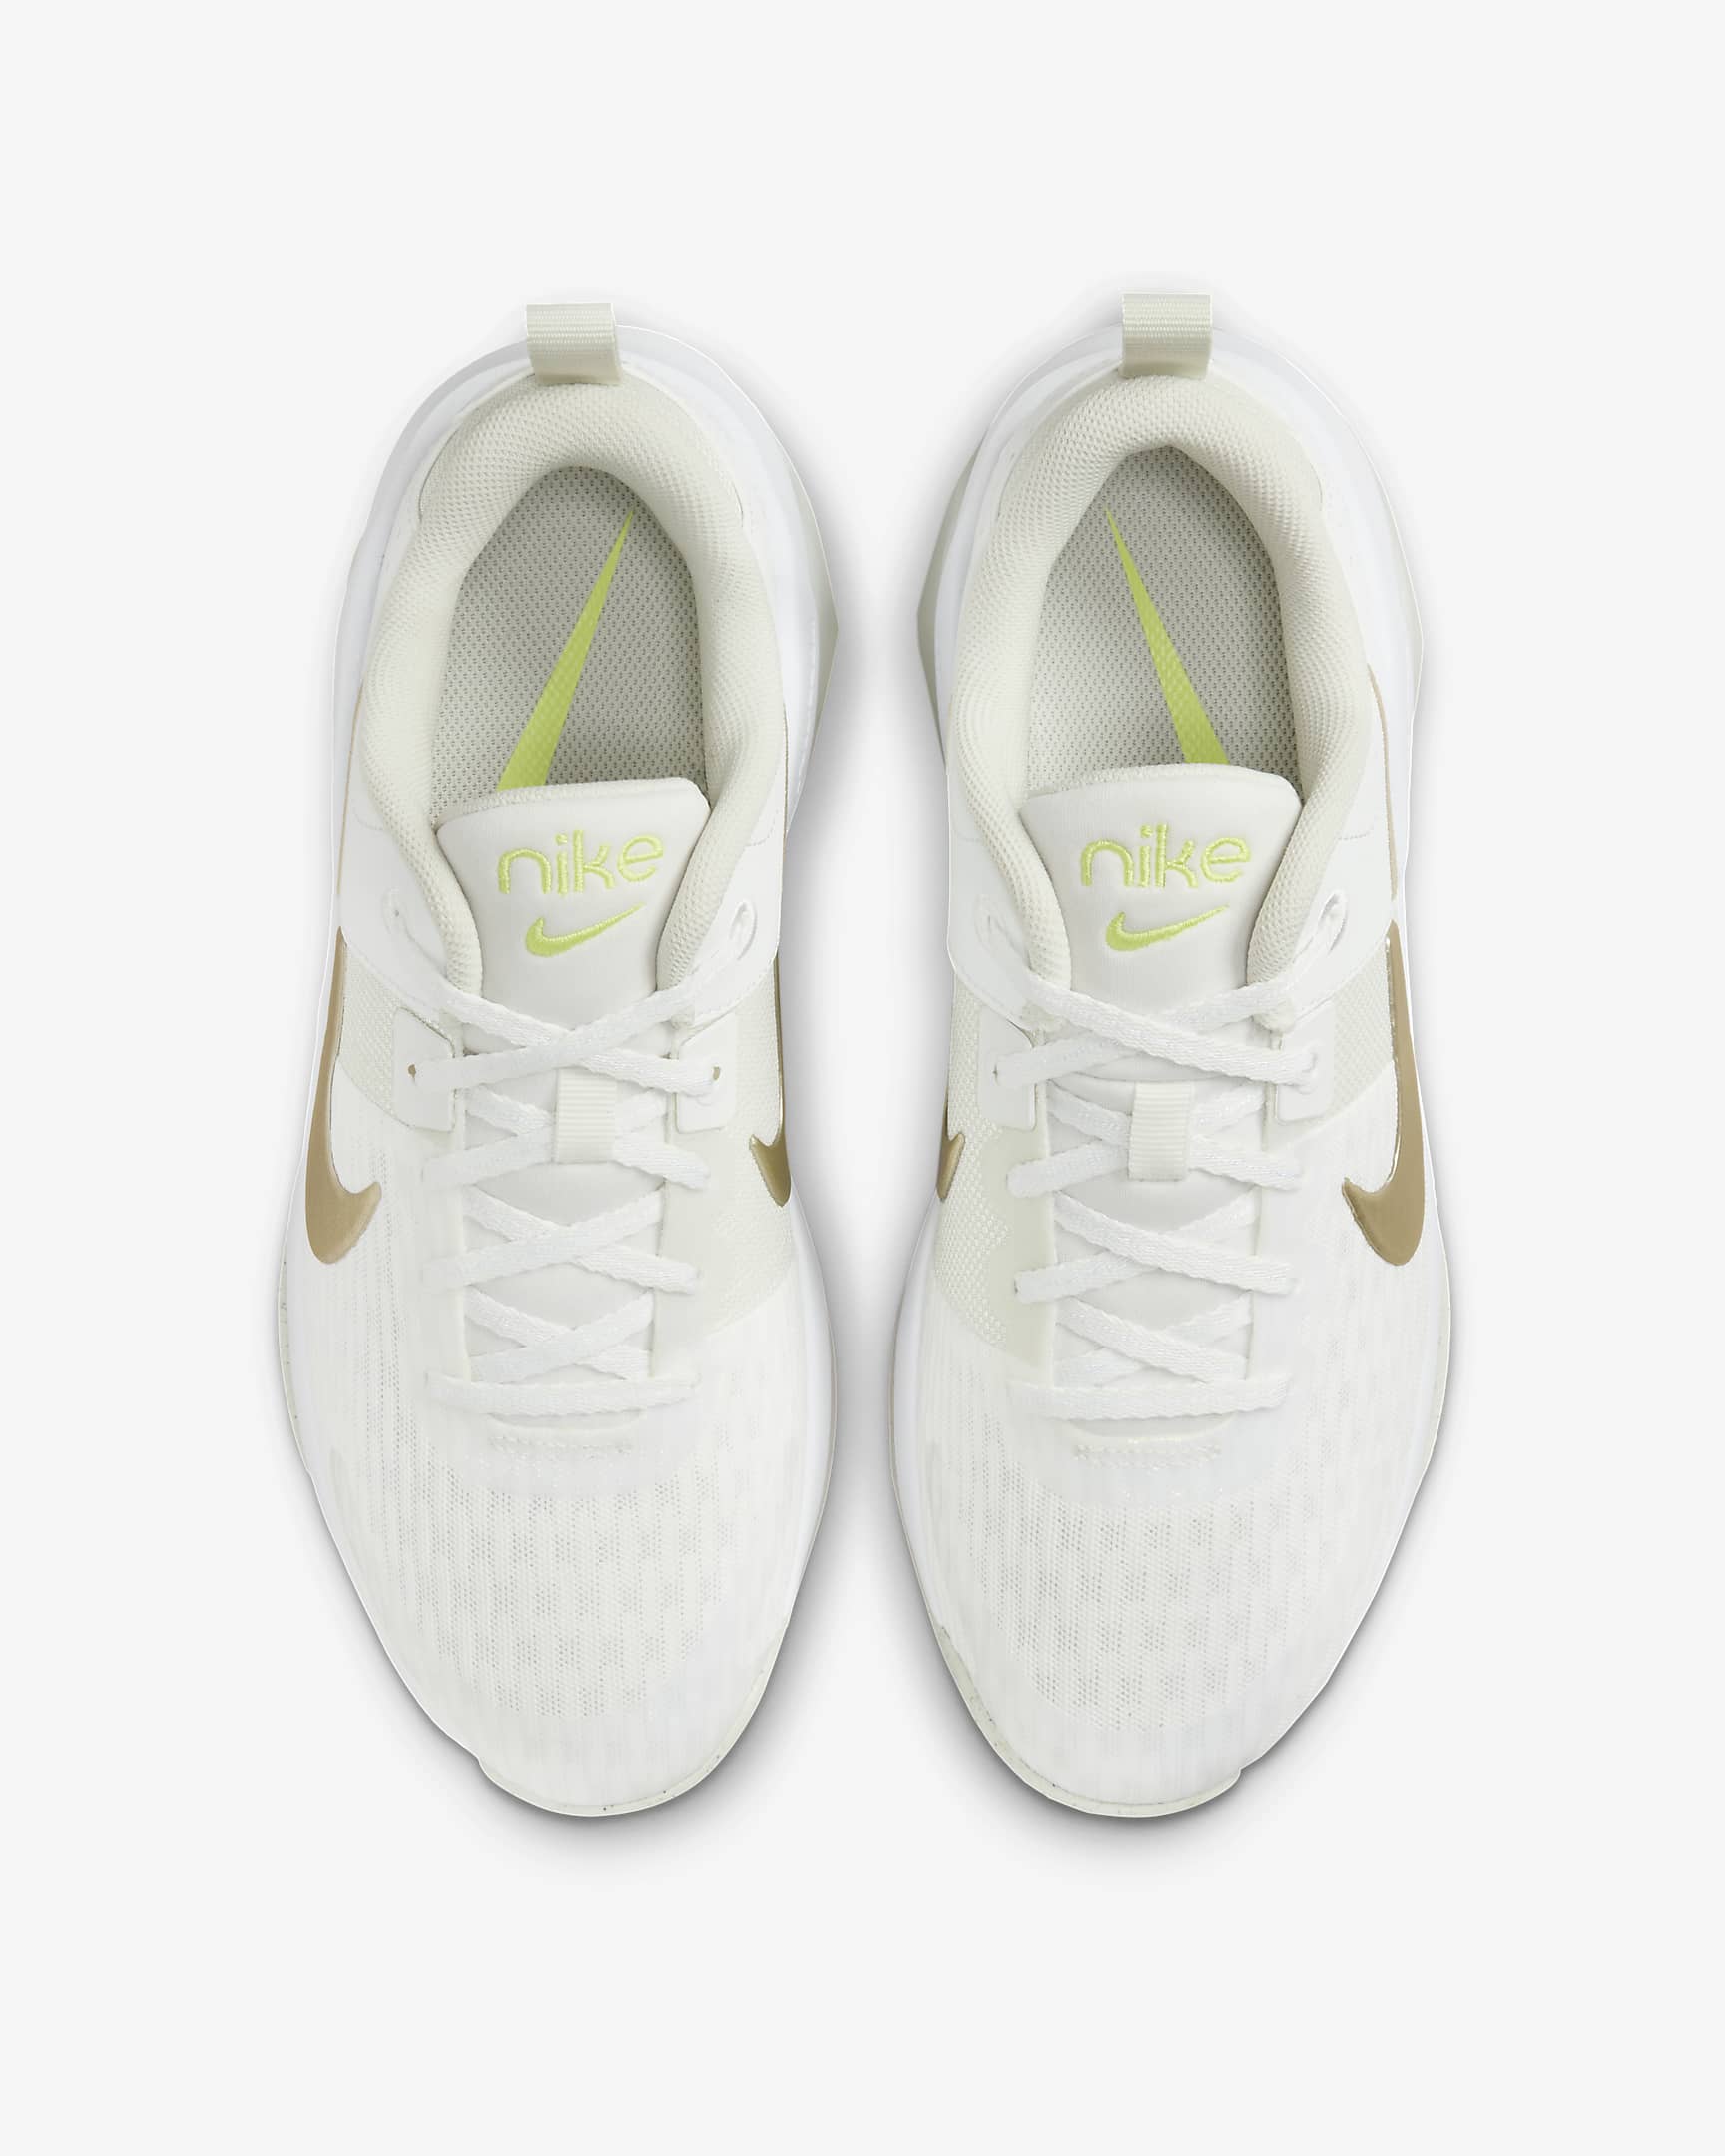 Nike Zoom Bella 6 Premium Women's Workout Shoes - Summit White/Sea Glass/Light Lemon Twist/Metallic Gold Star